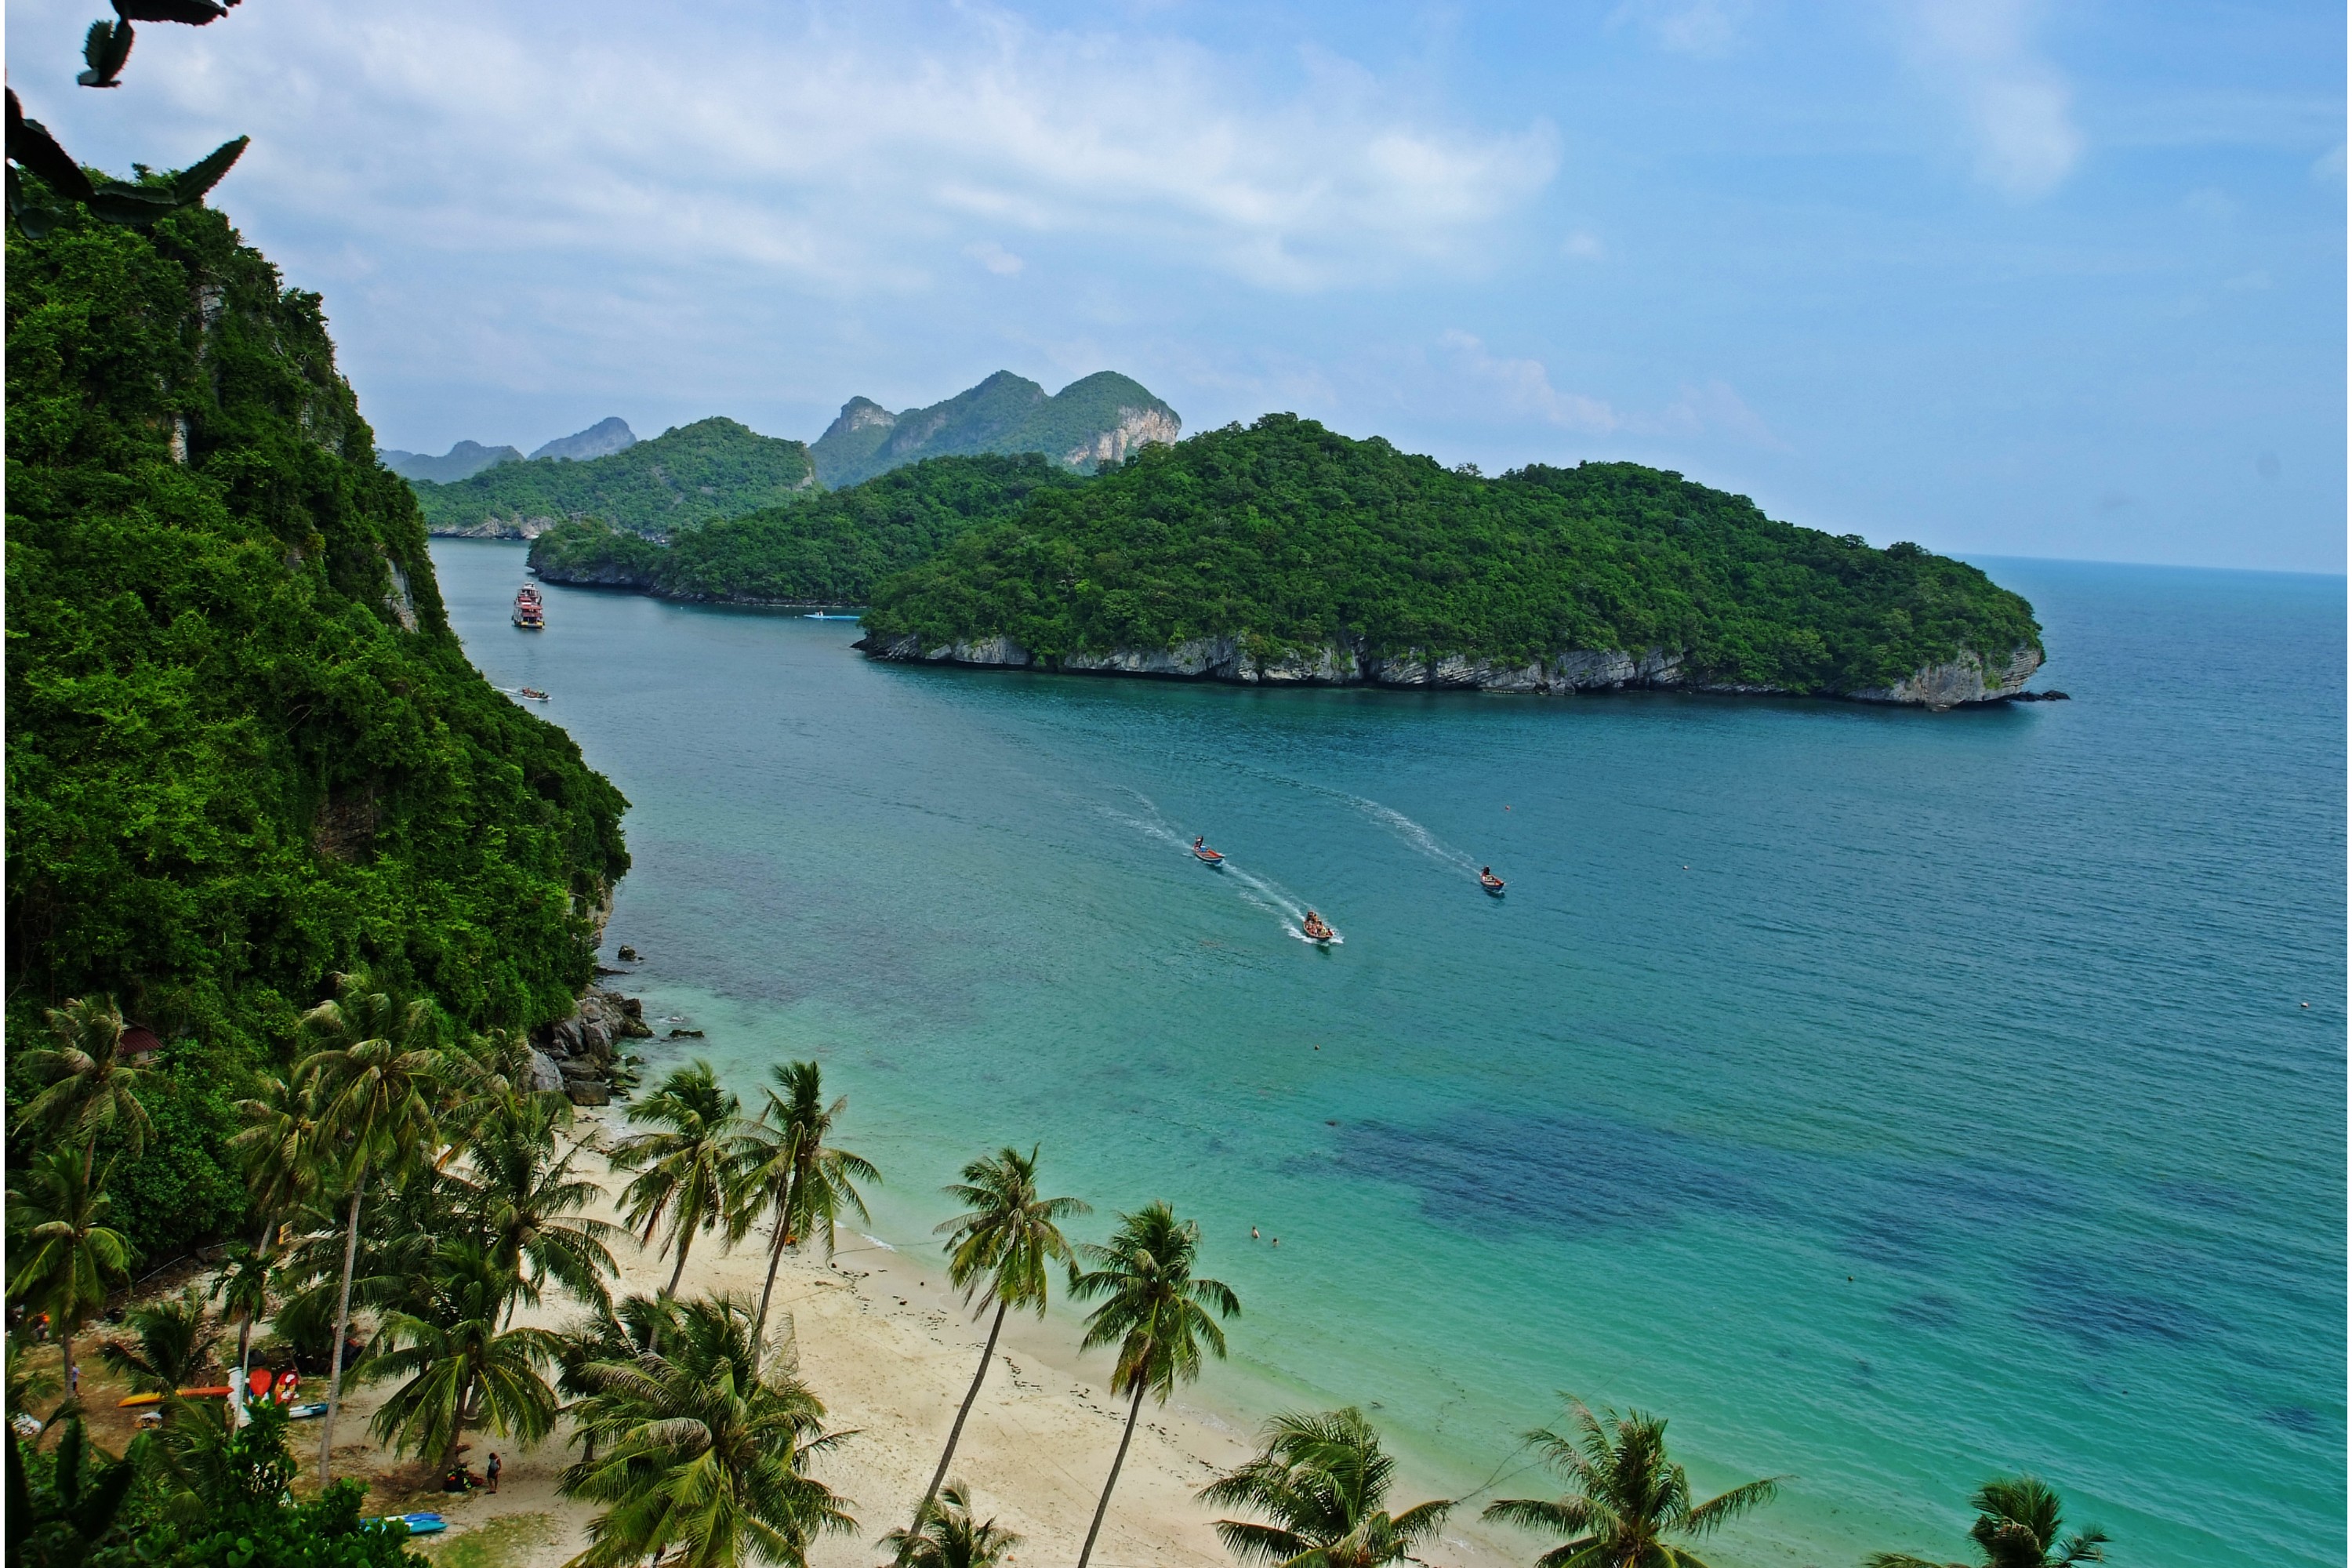 Hova utazzunk: Phuket, vagy Kho Samui?